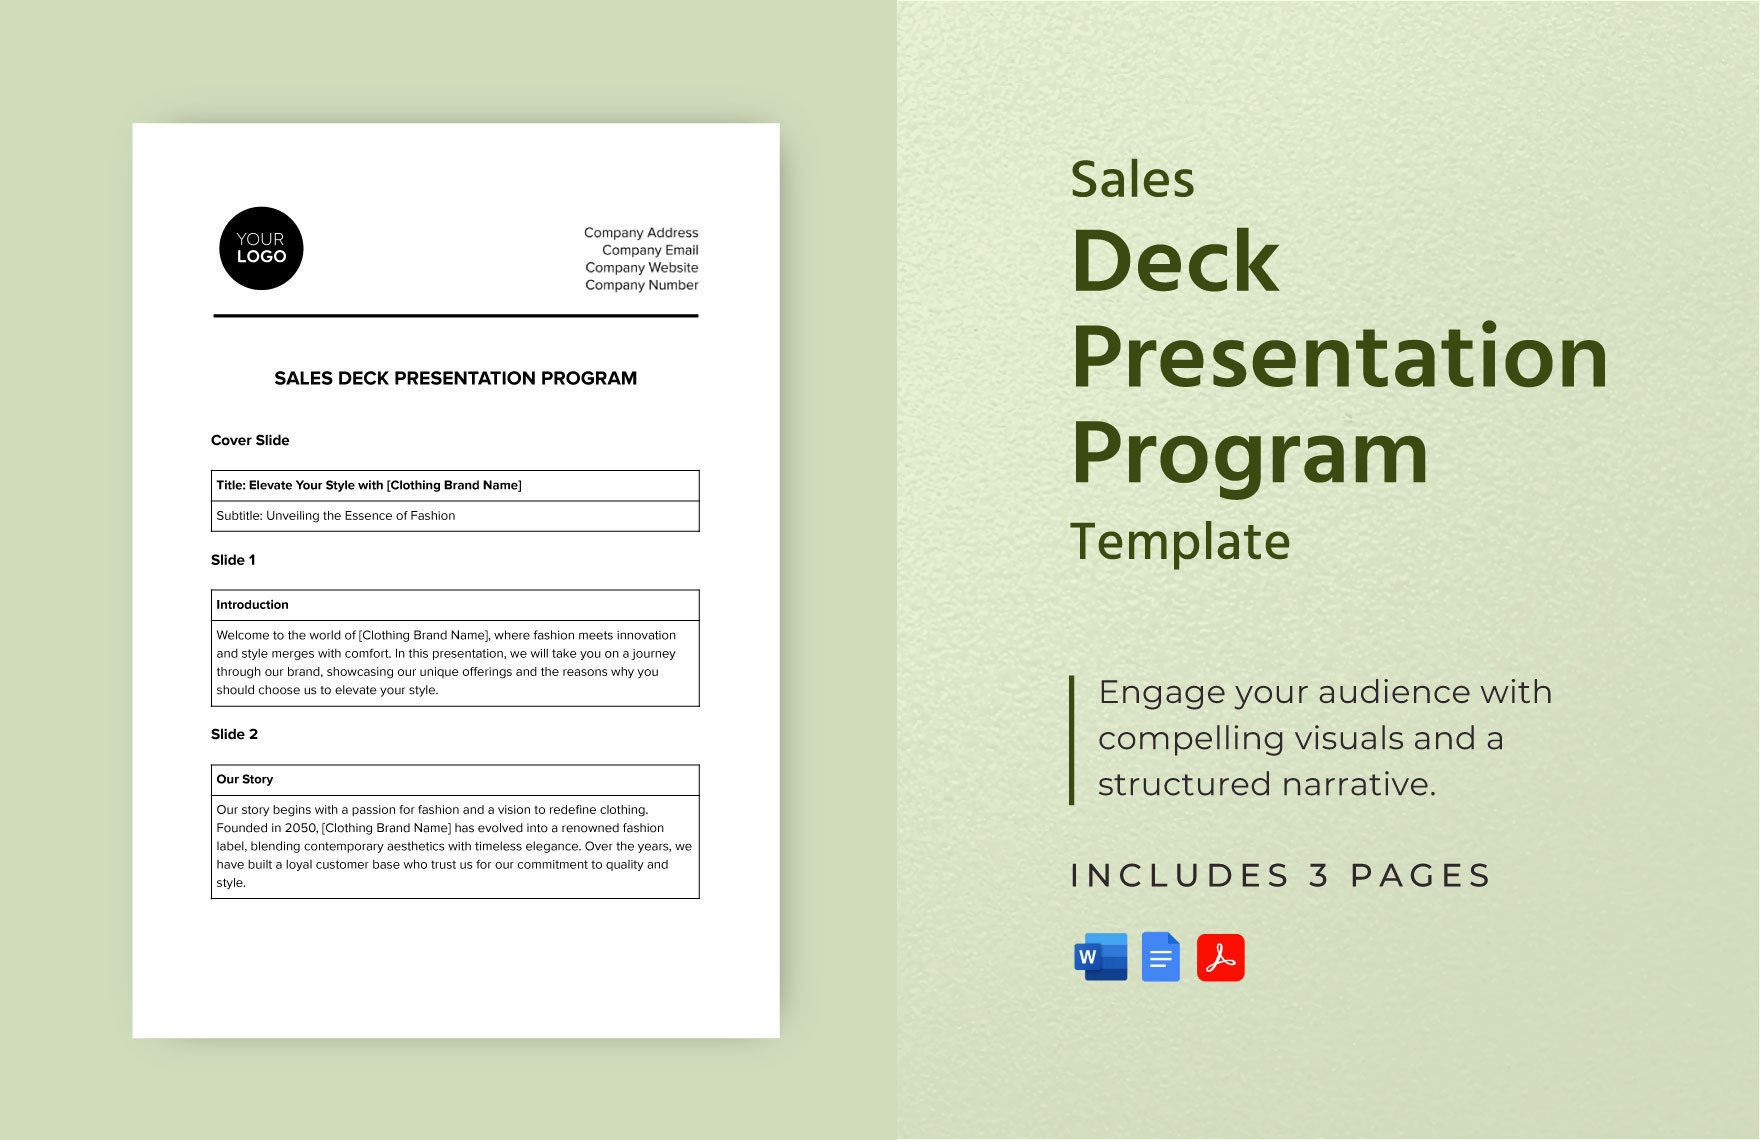 Sales Deck Presentation Program Template